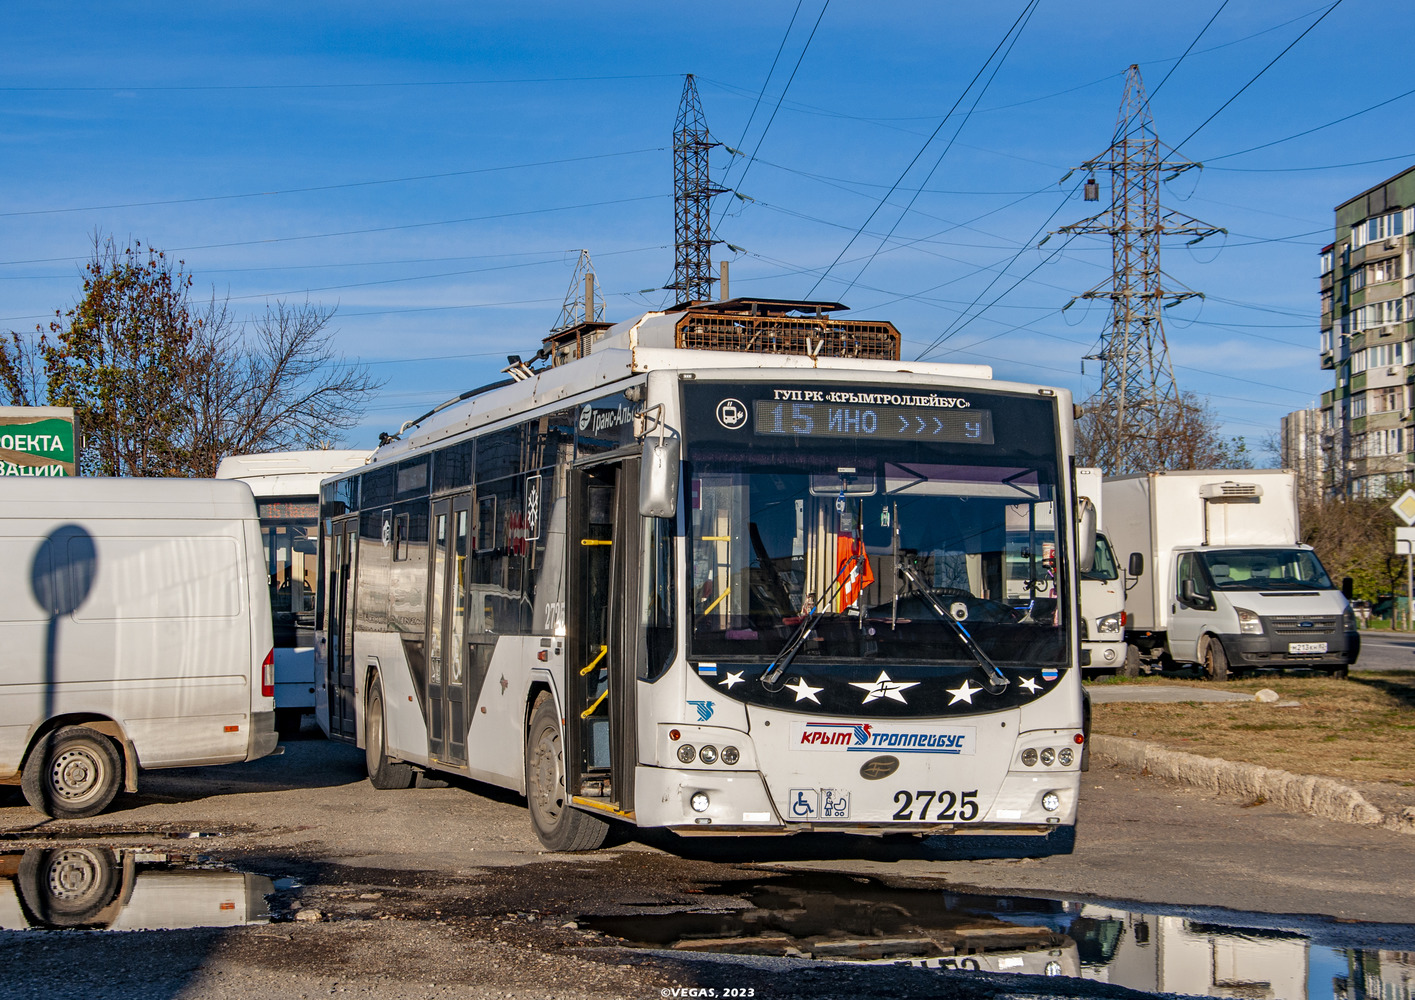 克里米亚无轨电车, VMZ-5298.01 “Avangard” # 2725; 克里米亚无轨电车 — The movement of trolleybuses without CS (autonomous running).